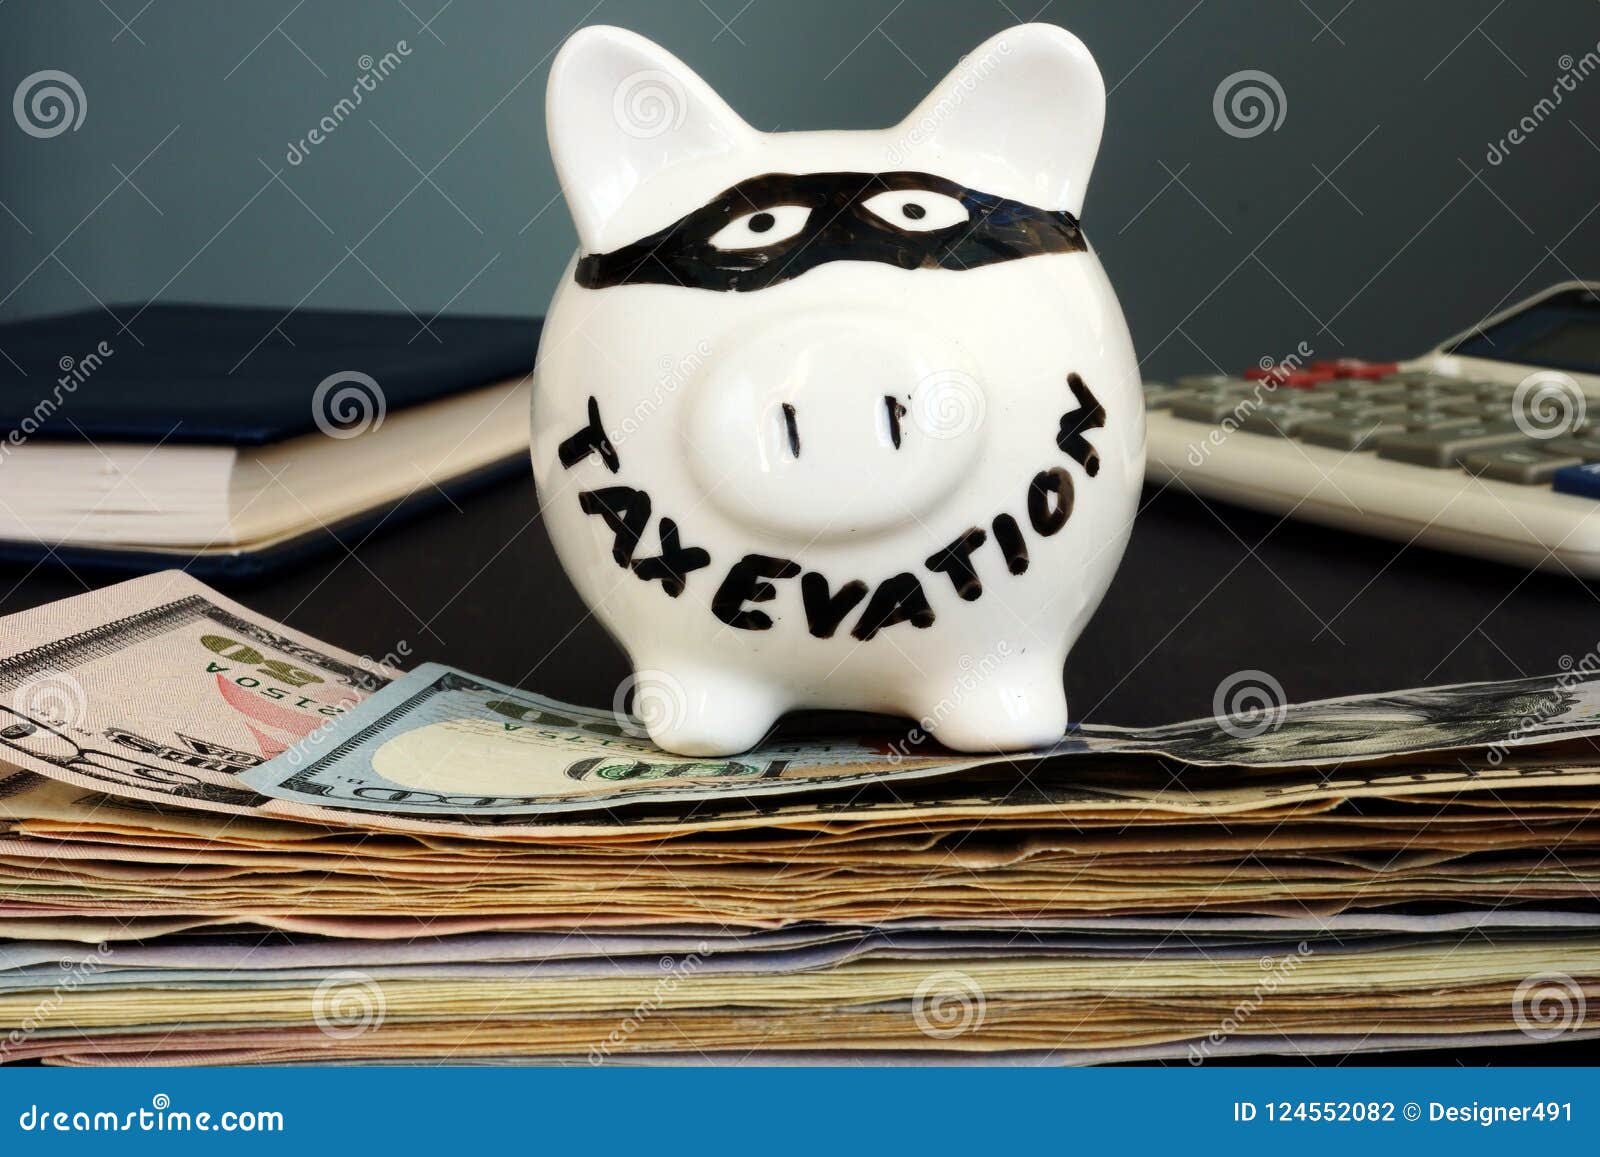 tax evasion written on the piggy bank.